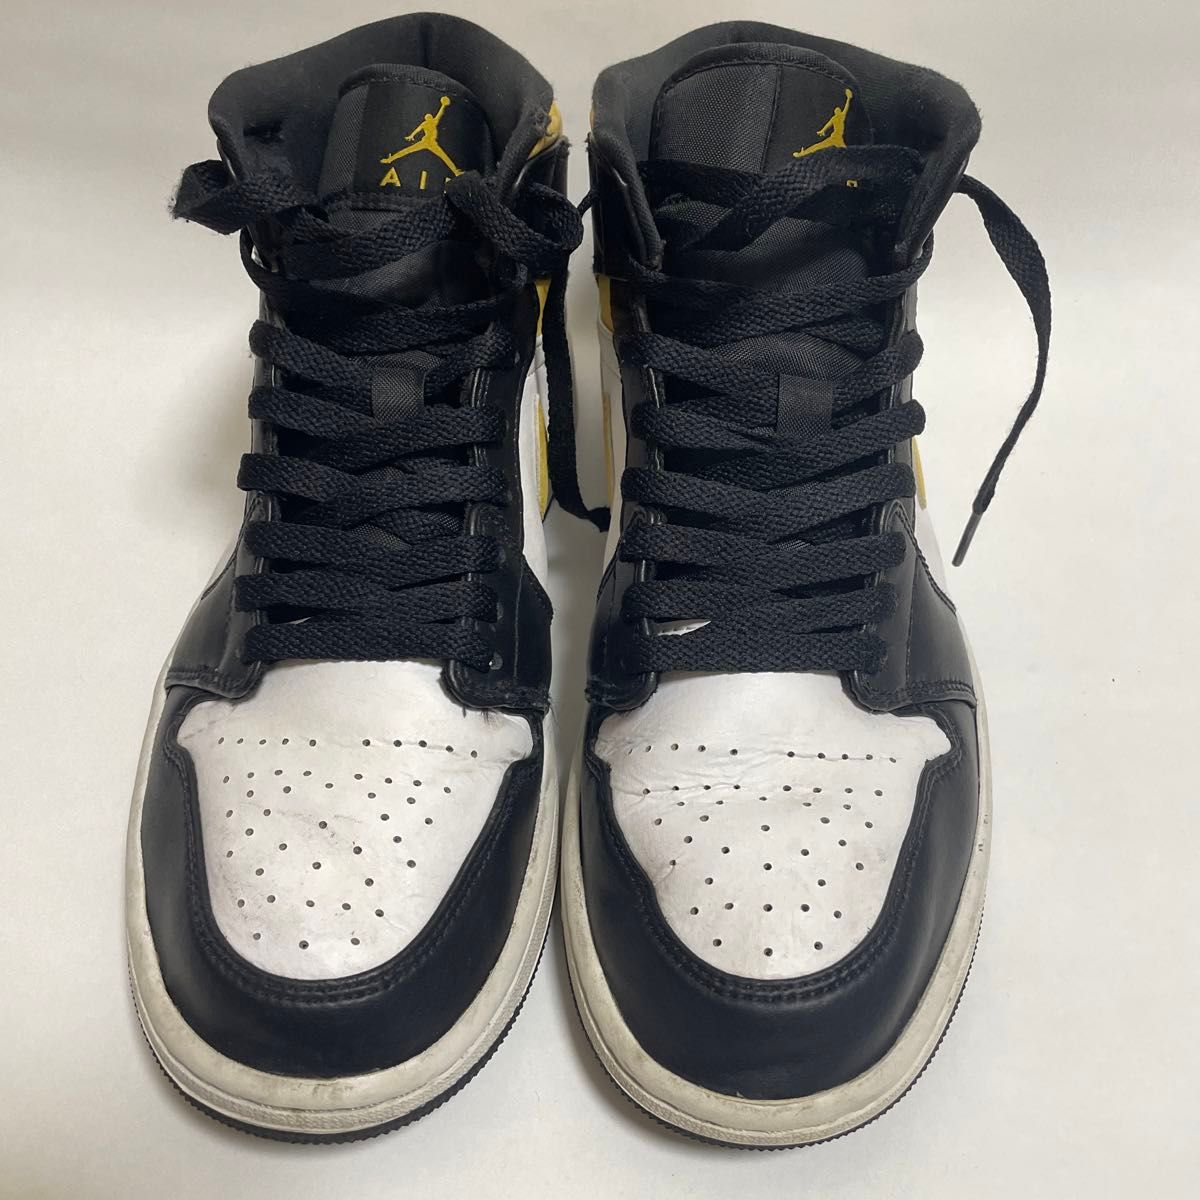 Air Jordan 1 Mid “White Pollen Black”